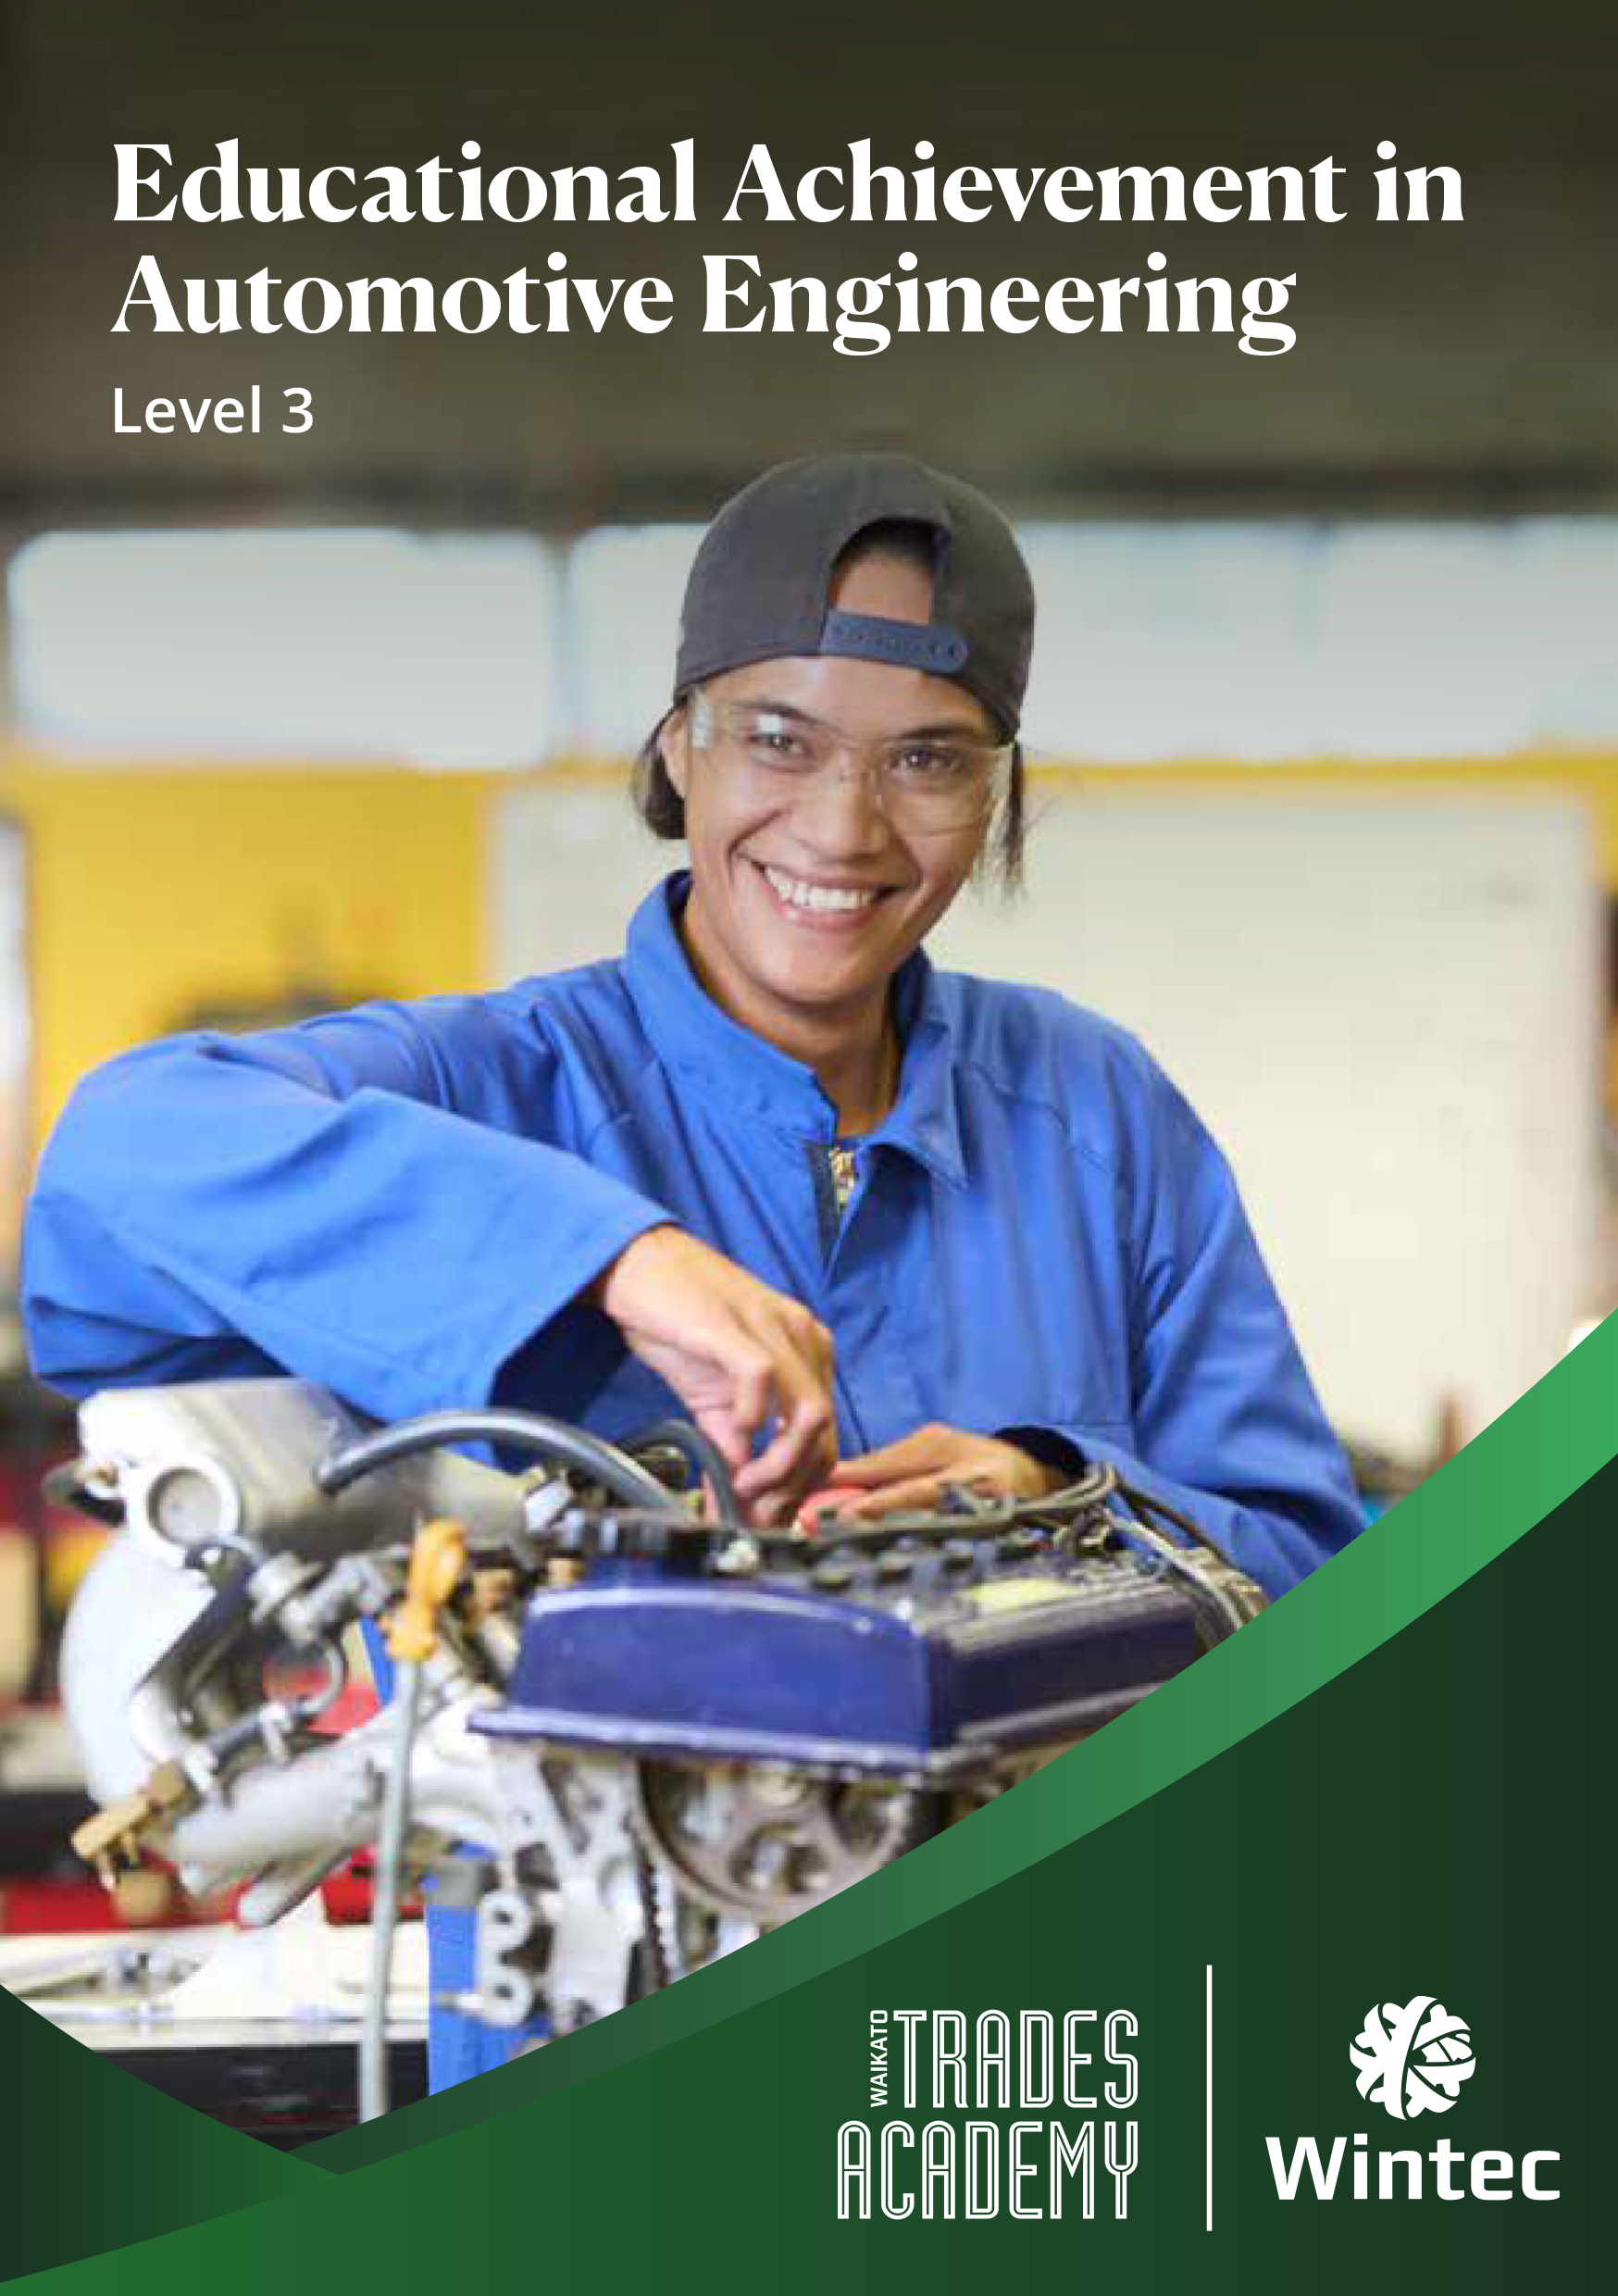 WTA Education Achievement in Automotive Engineering Level 3